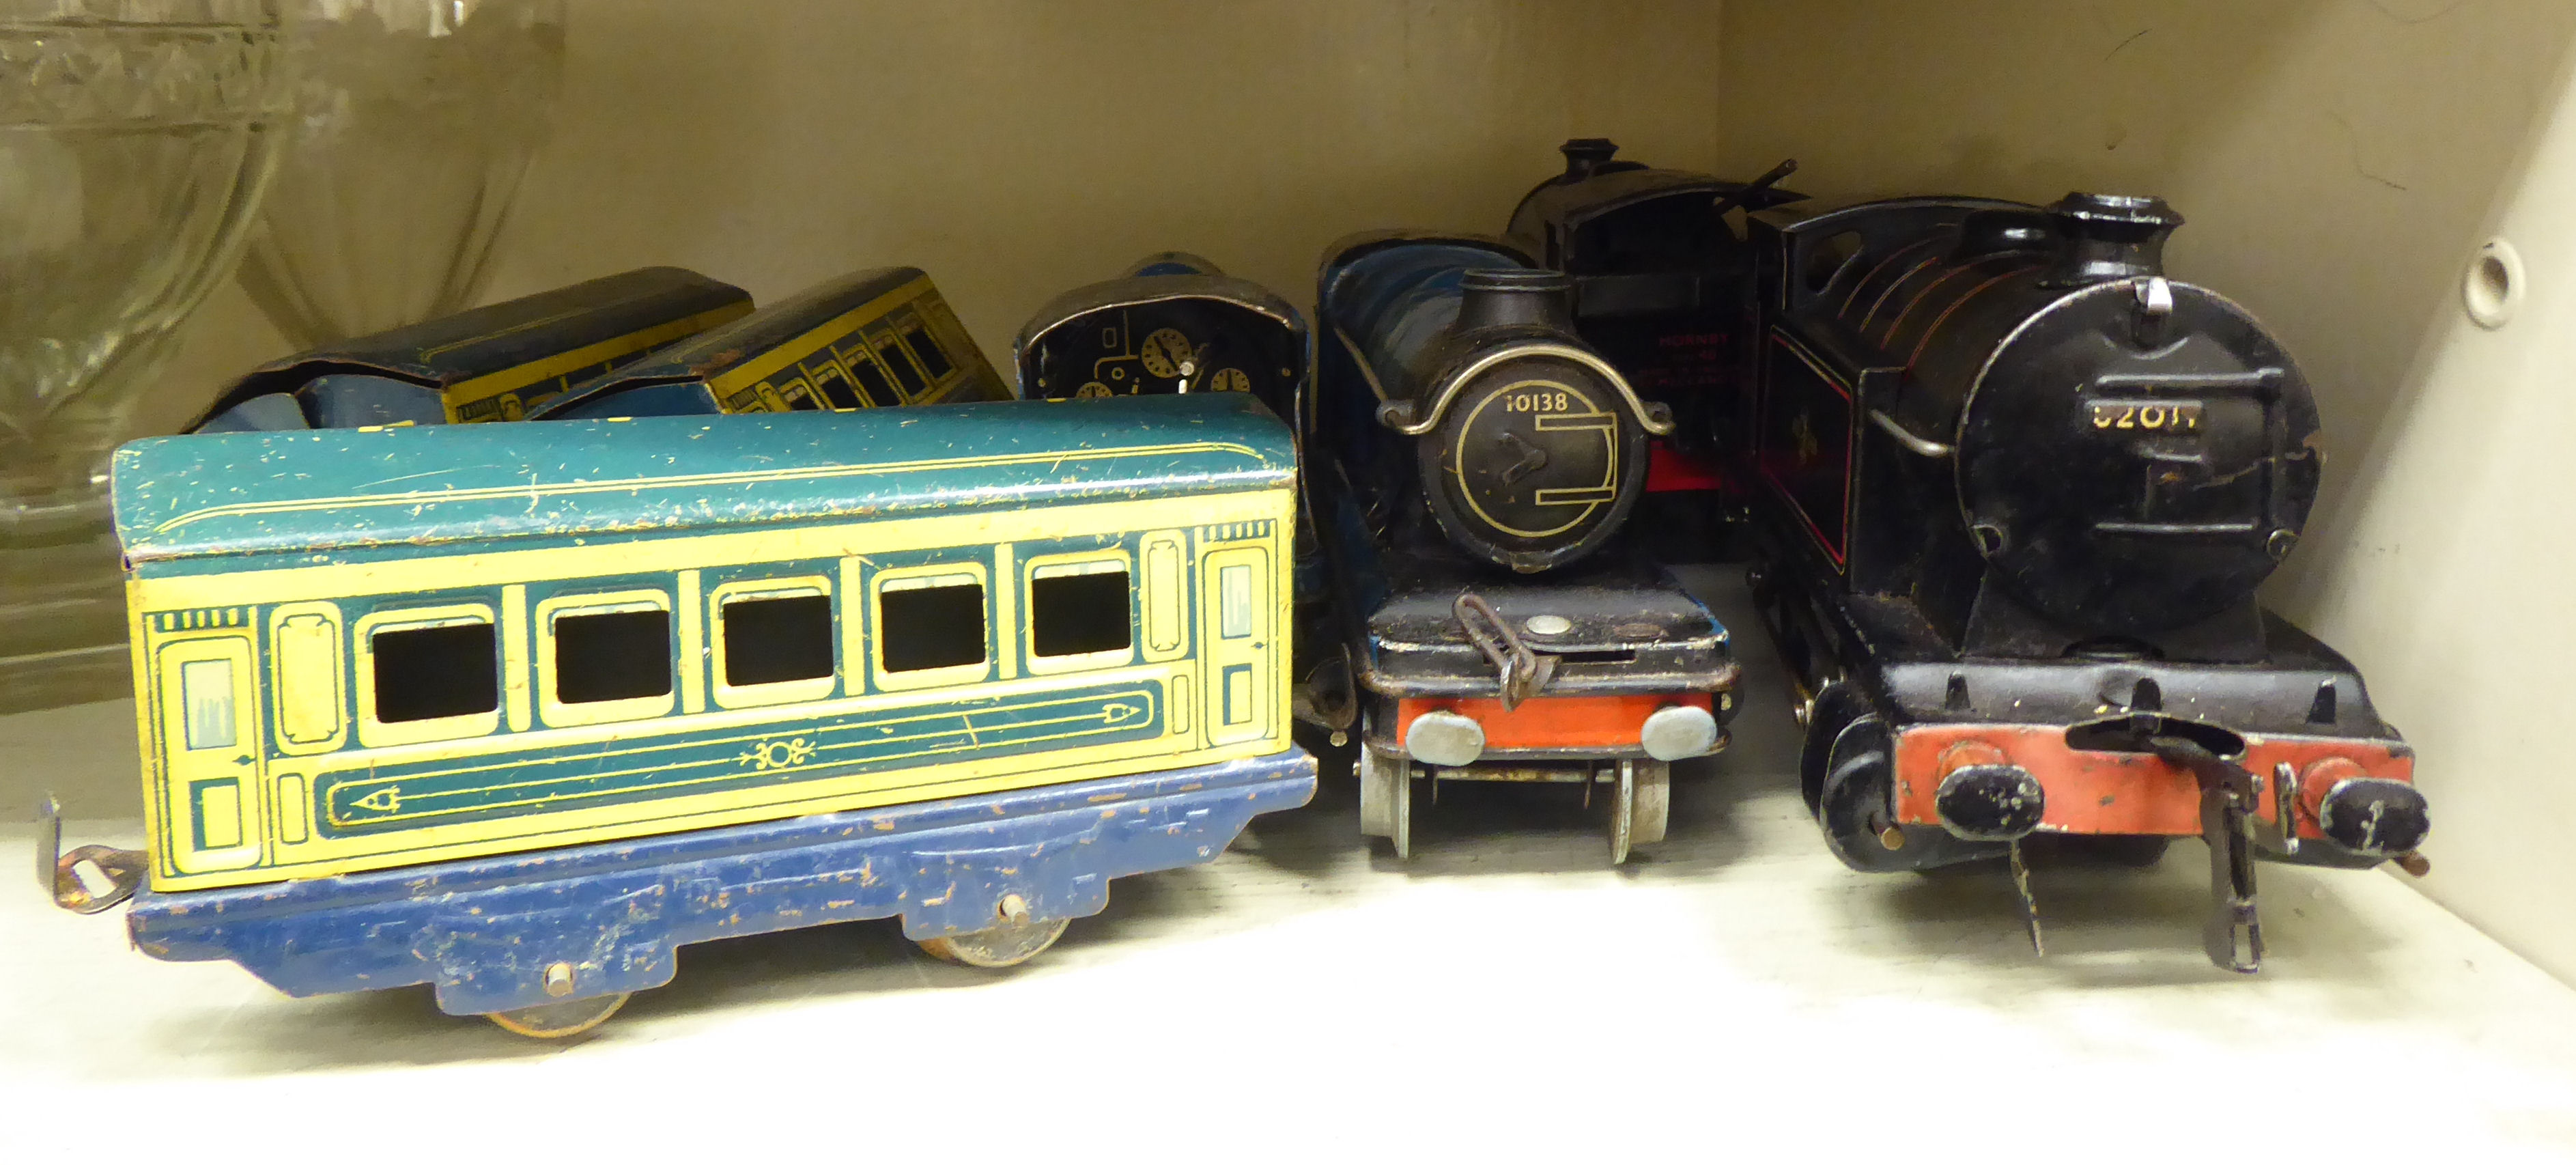 Four 0 gauge, tinplate clockwork model railway locomotives and three matching passenger coaches